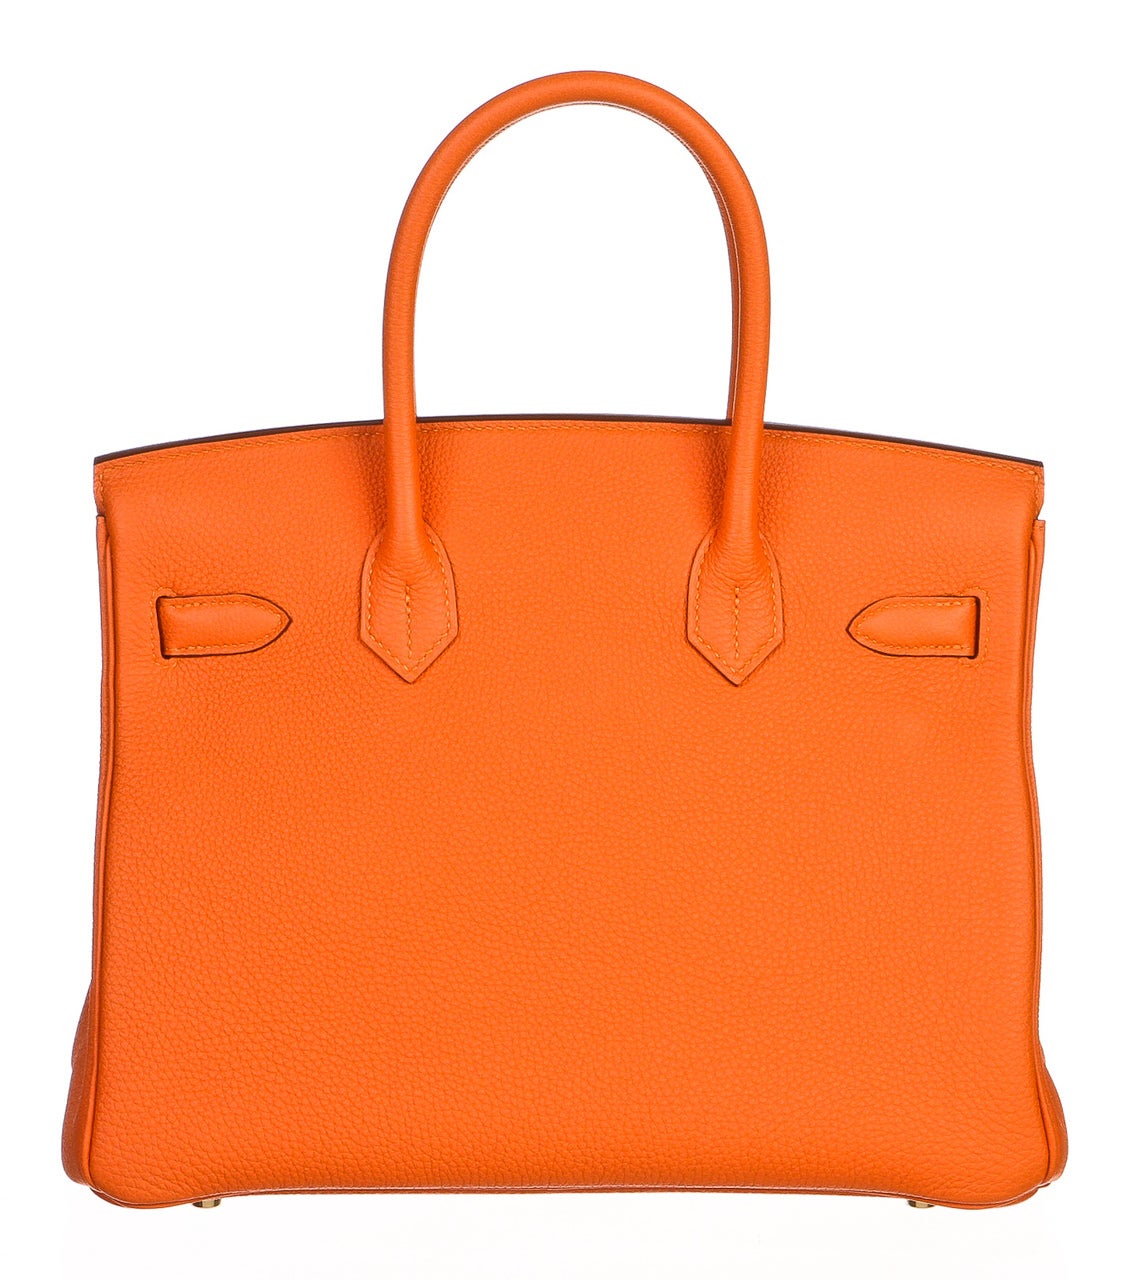 Hermes Orange Togo Leather 30cm Birkin Handbag 3